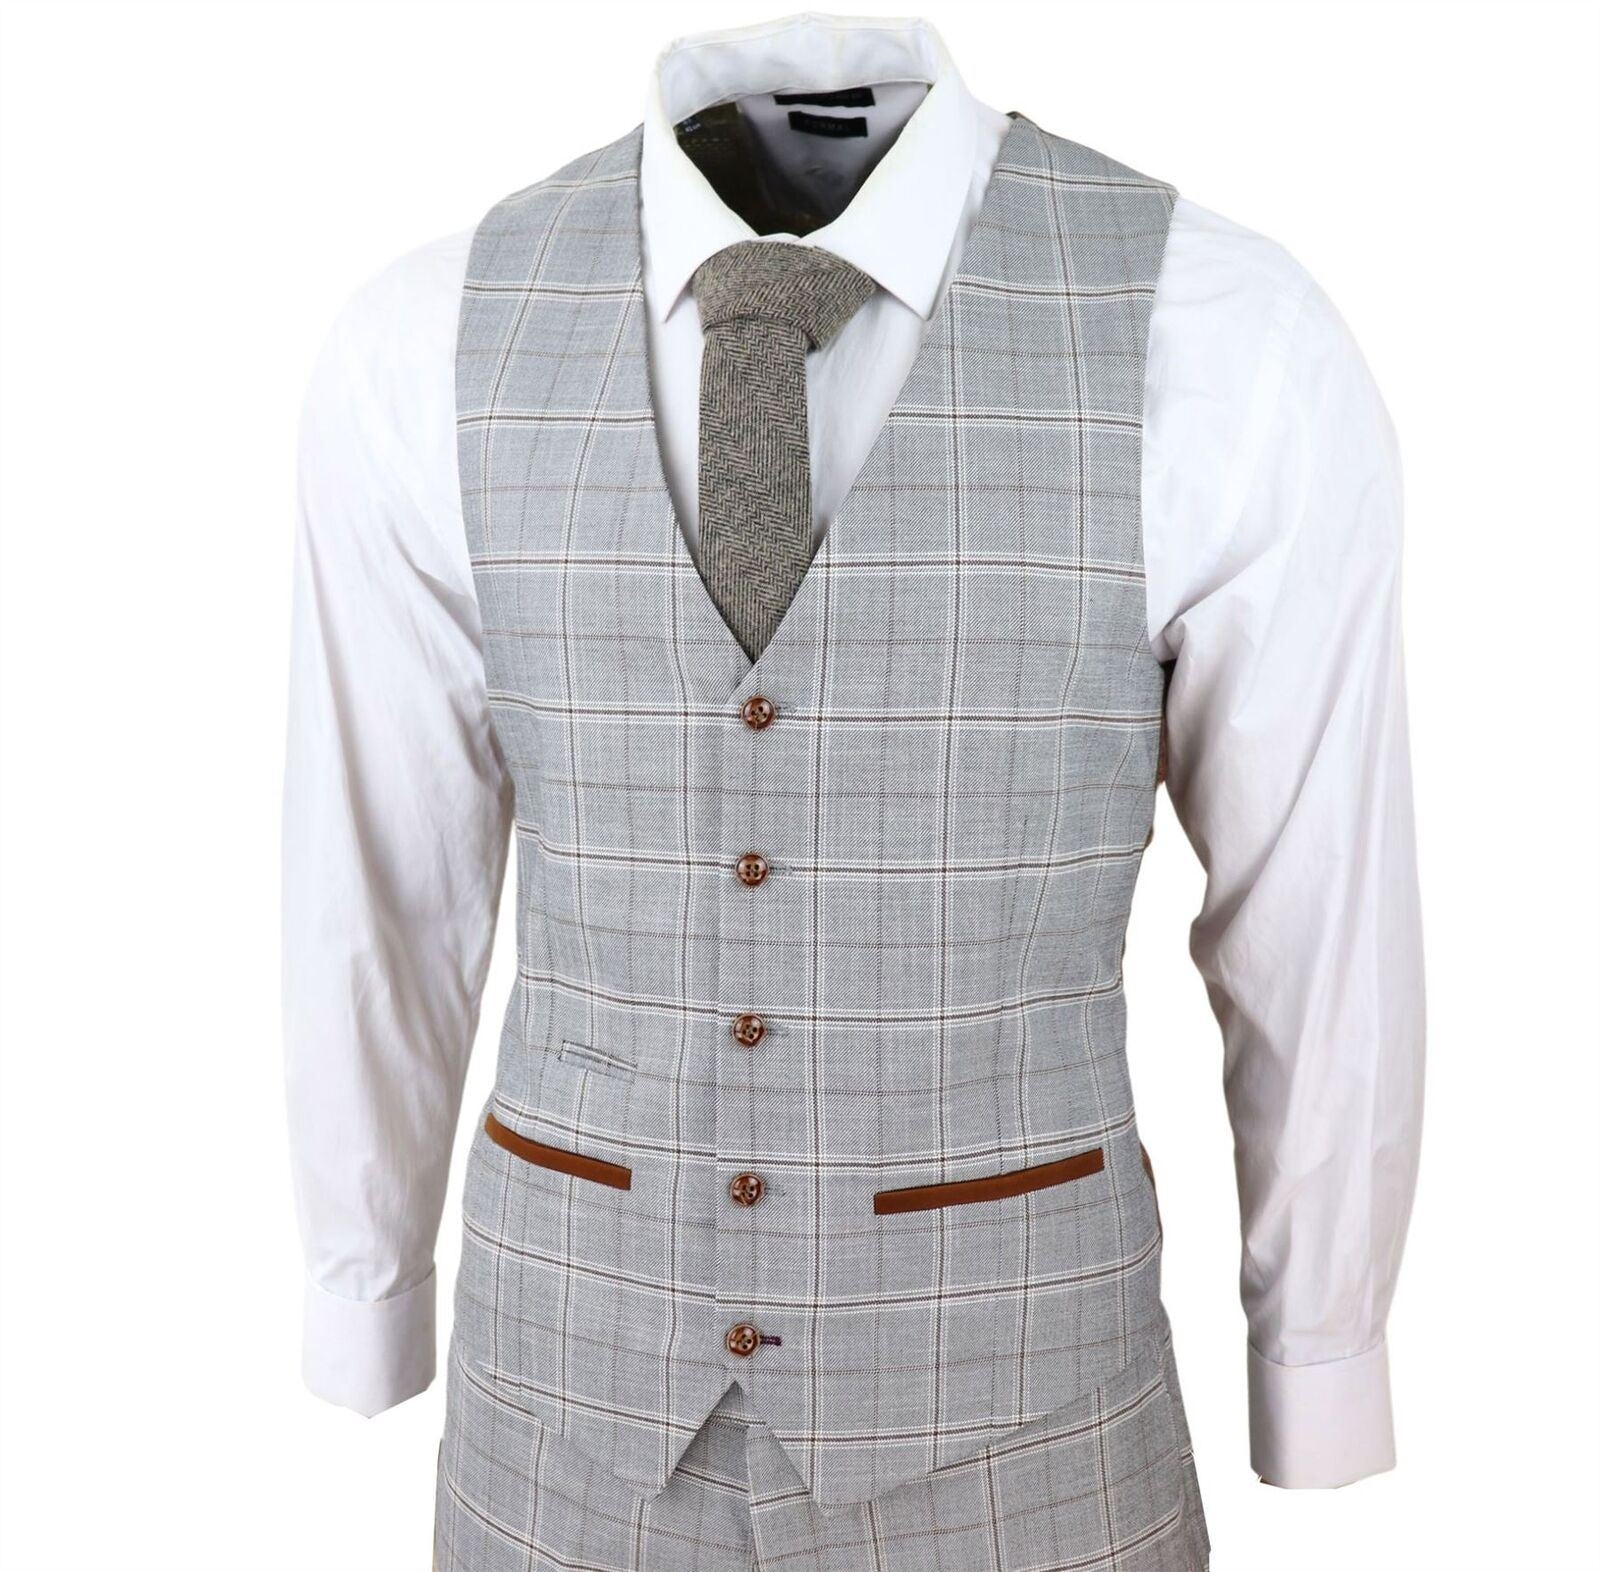 Mens Light Grey 3 Piece Velvet Trims Tailored Fit Suit - Upperclass Fashions 